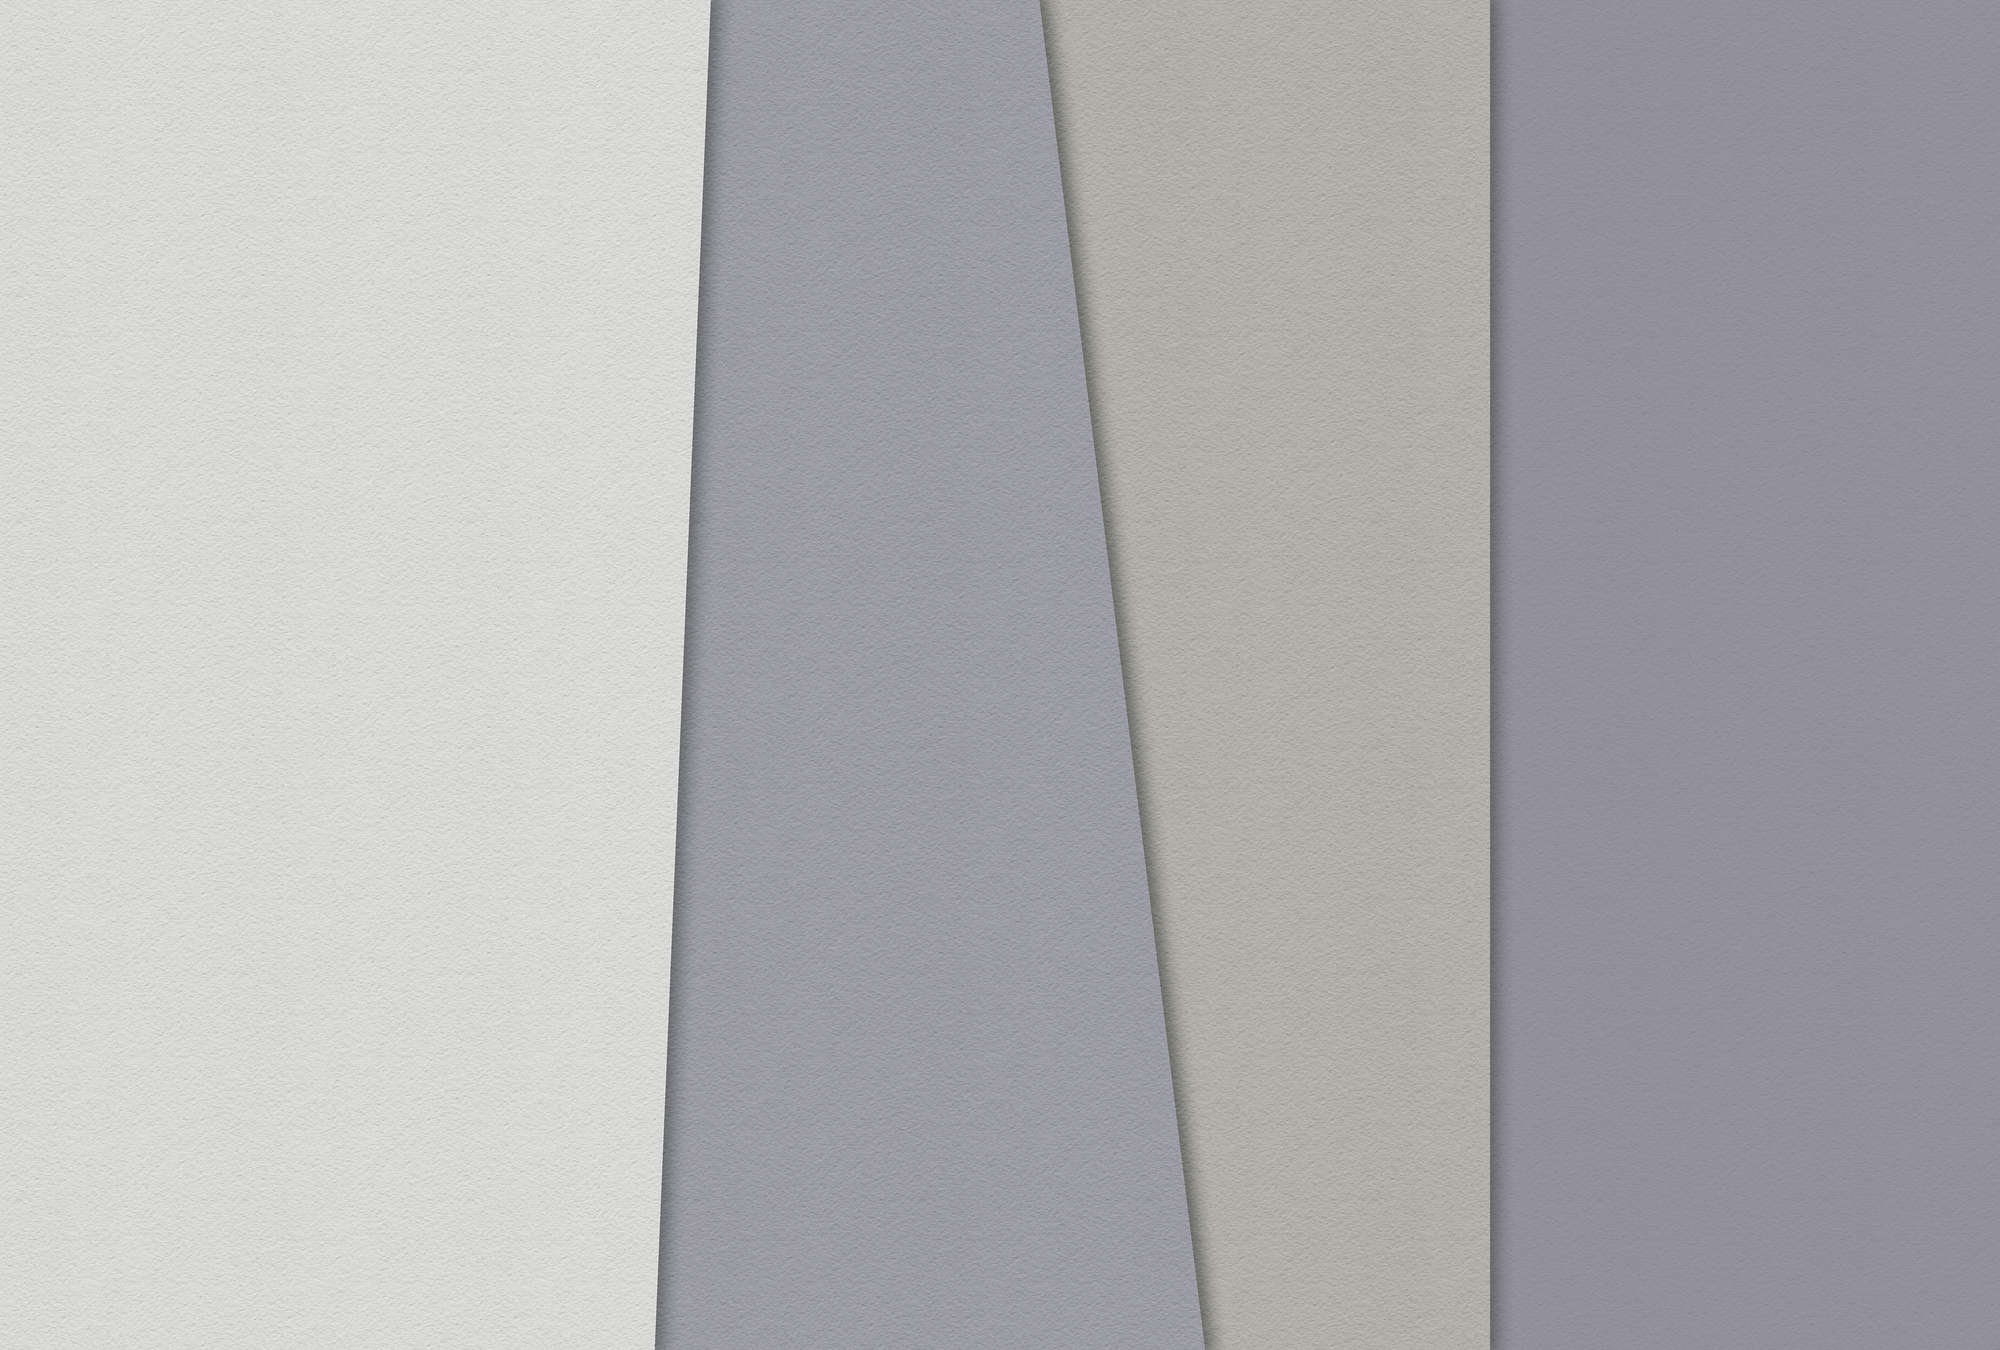             Layered paper 2 - Graphic wallpaper, handmade paper structure minimalist design - Cream, Green | Matt smooth fleece
        